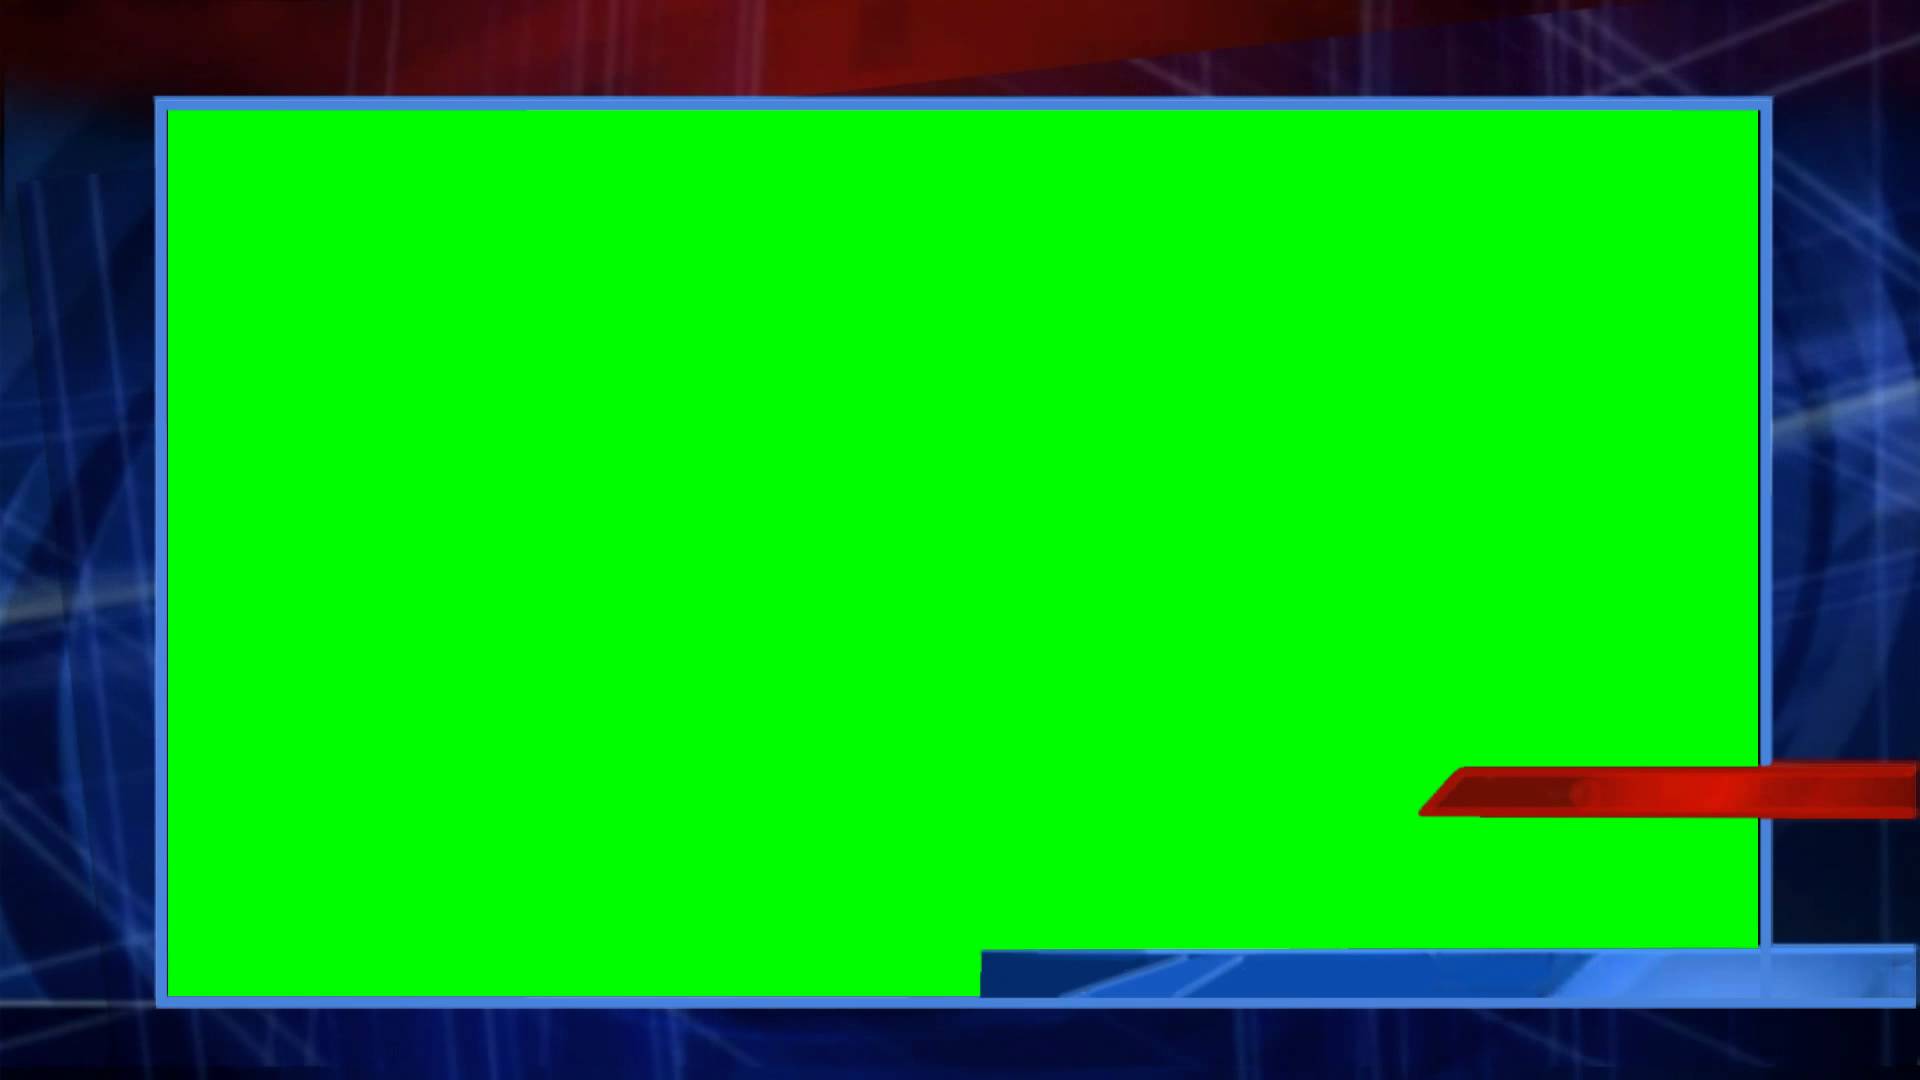 News Overlay Green Screen Background Video 1080p HD Stock